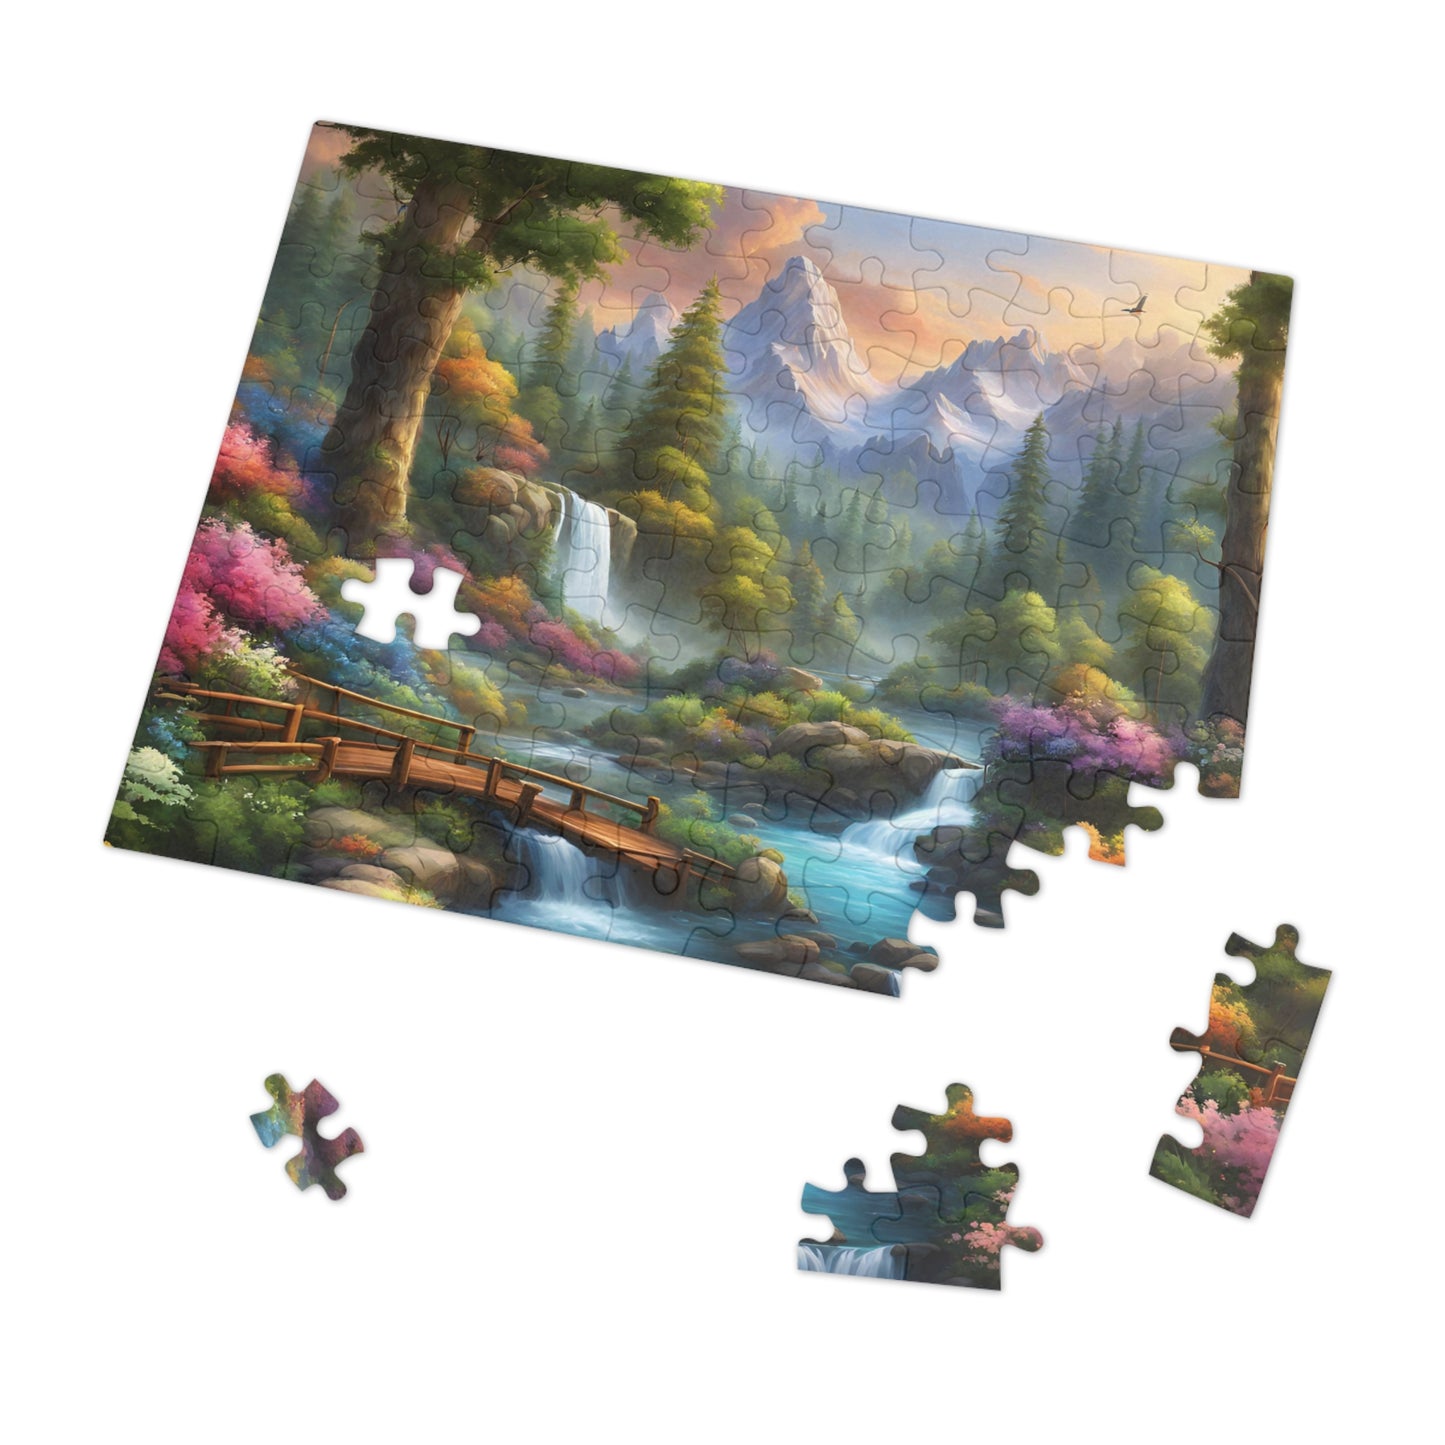 BRAIN GUARD Jigsaw Puzzle for Seniors (30, 110-Piece)